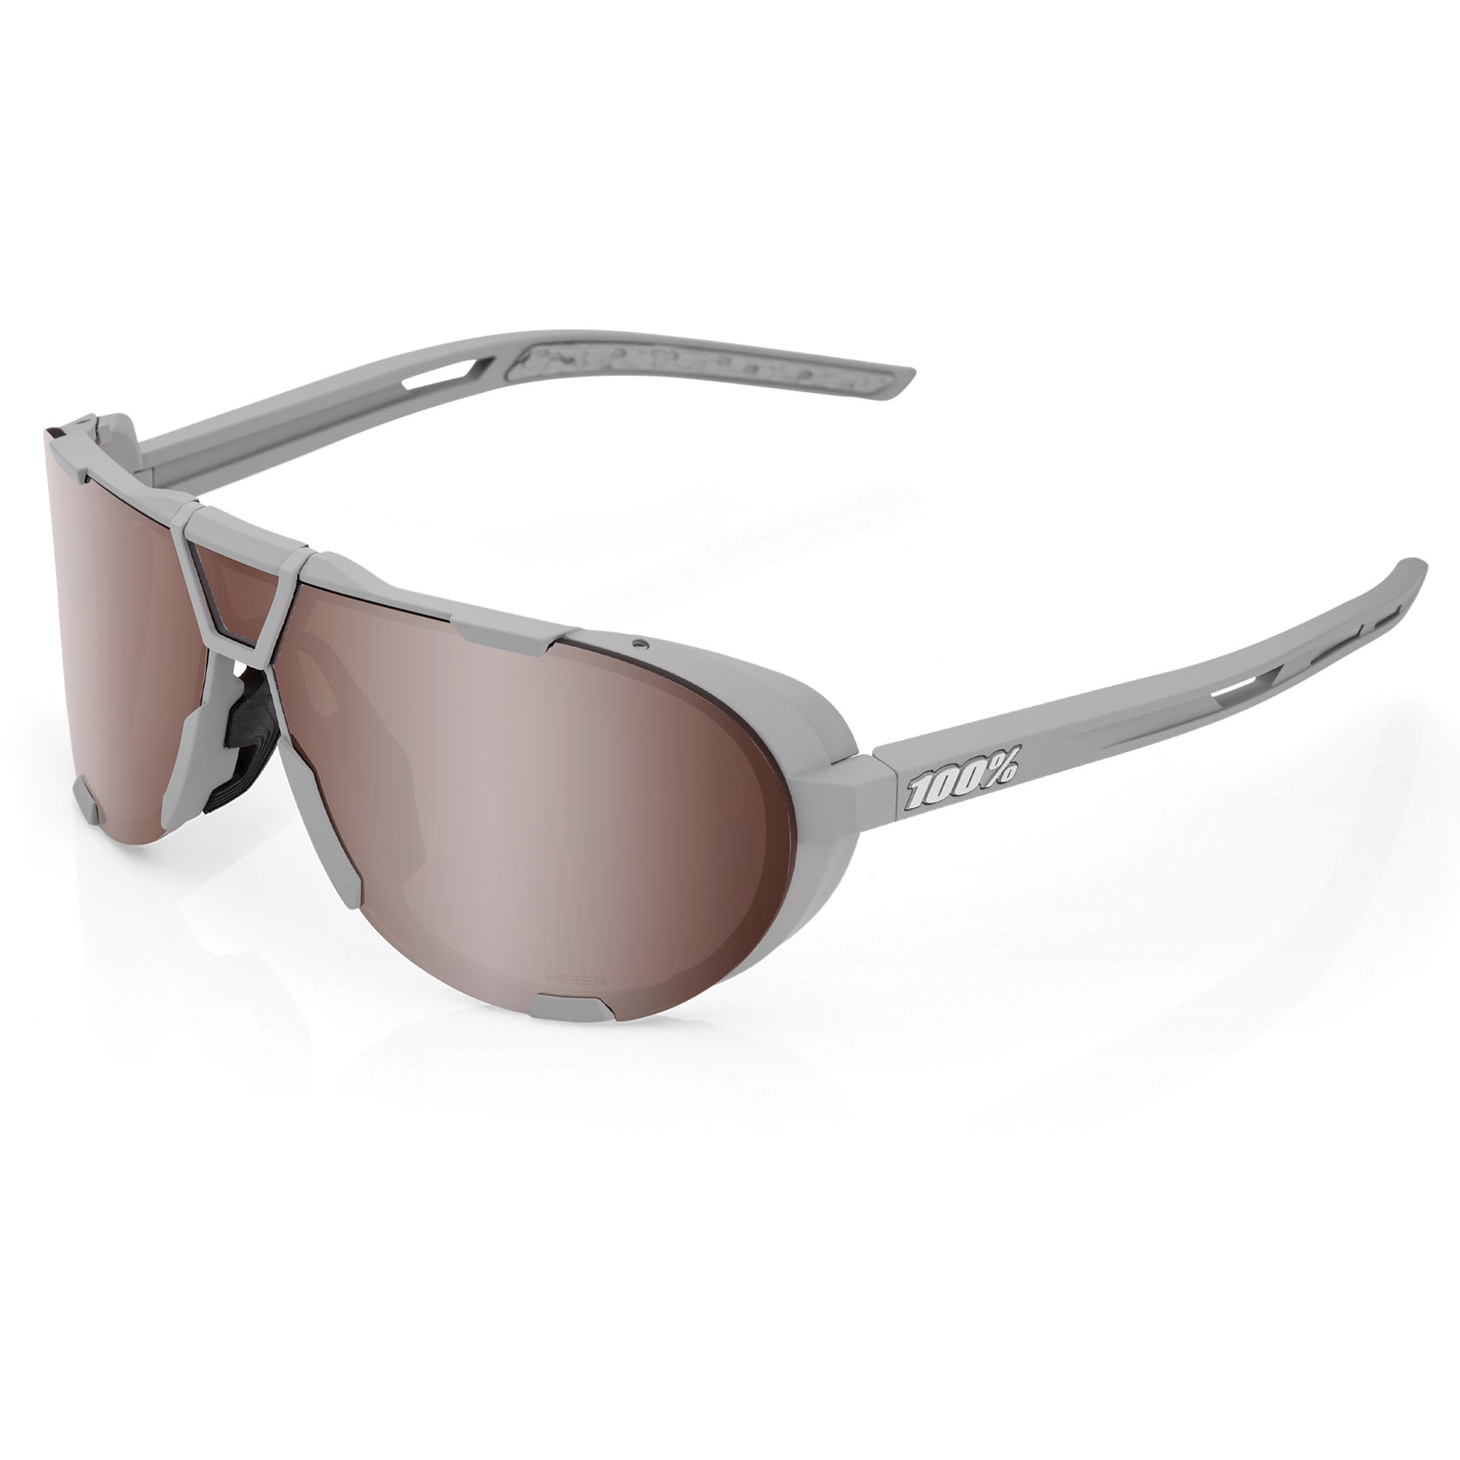 Productfoto van 100% Westcraft Glasses - HiPER Mirror Lens - Soft Tact Cool Grey / Crimson Silver